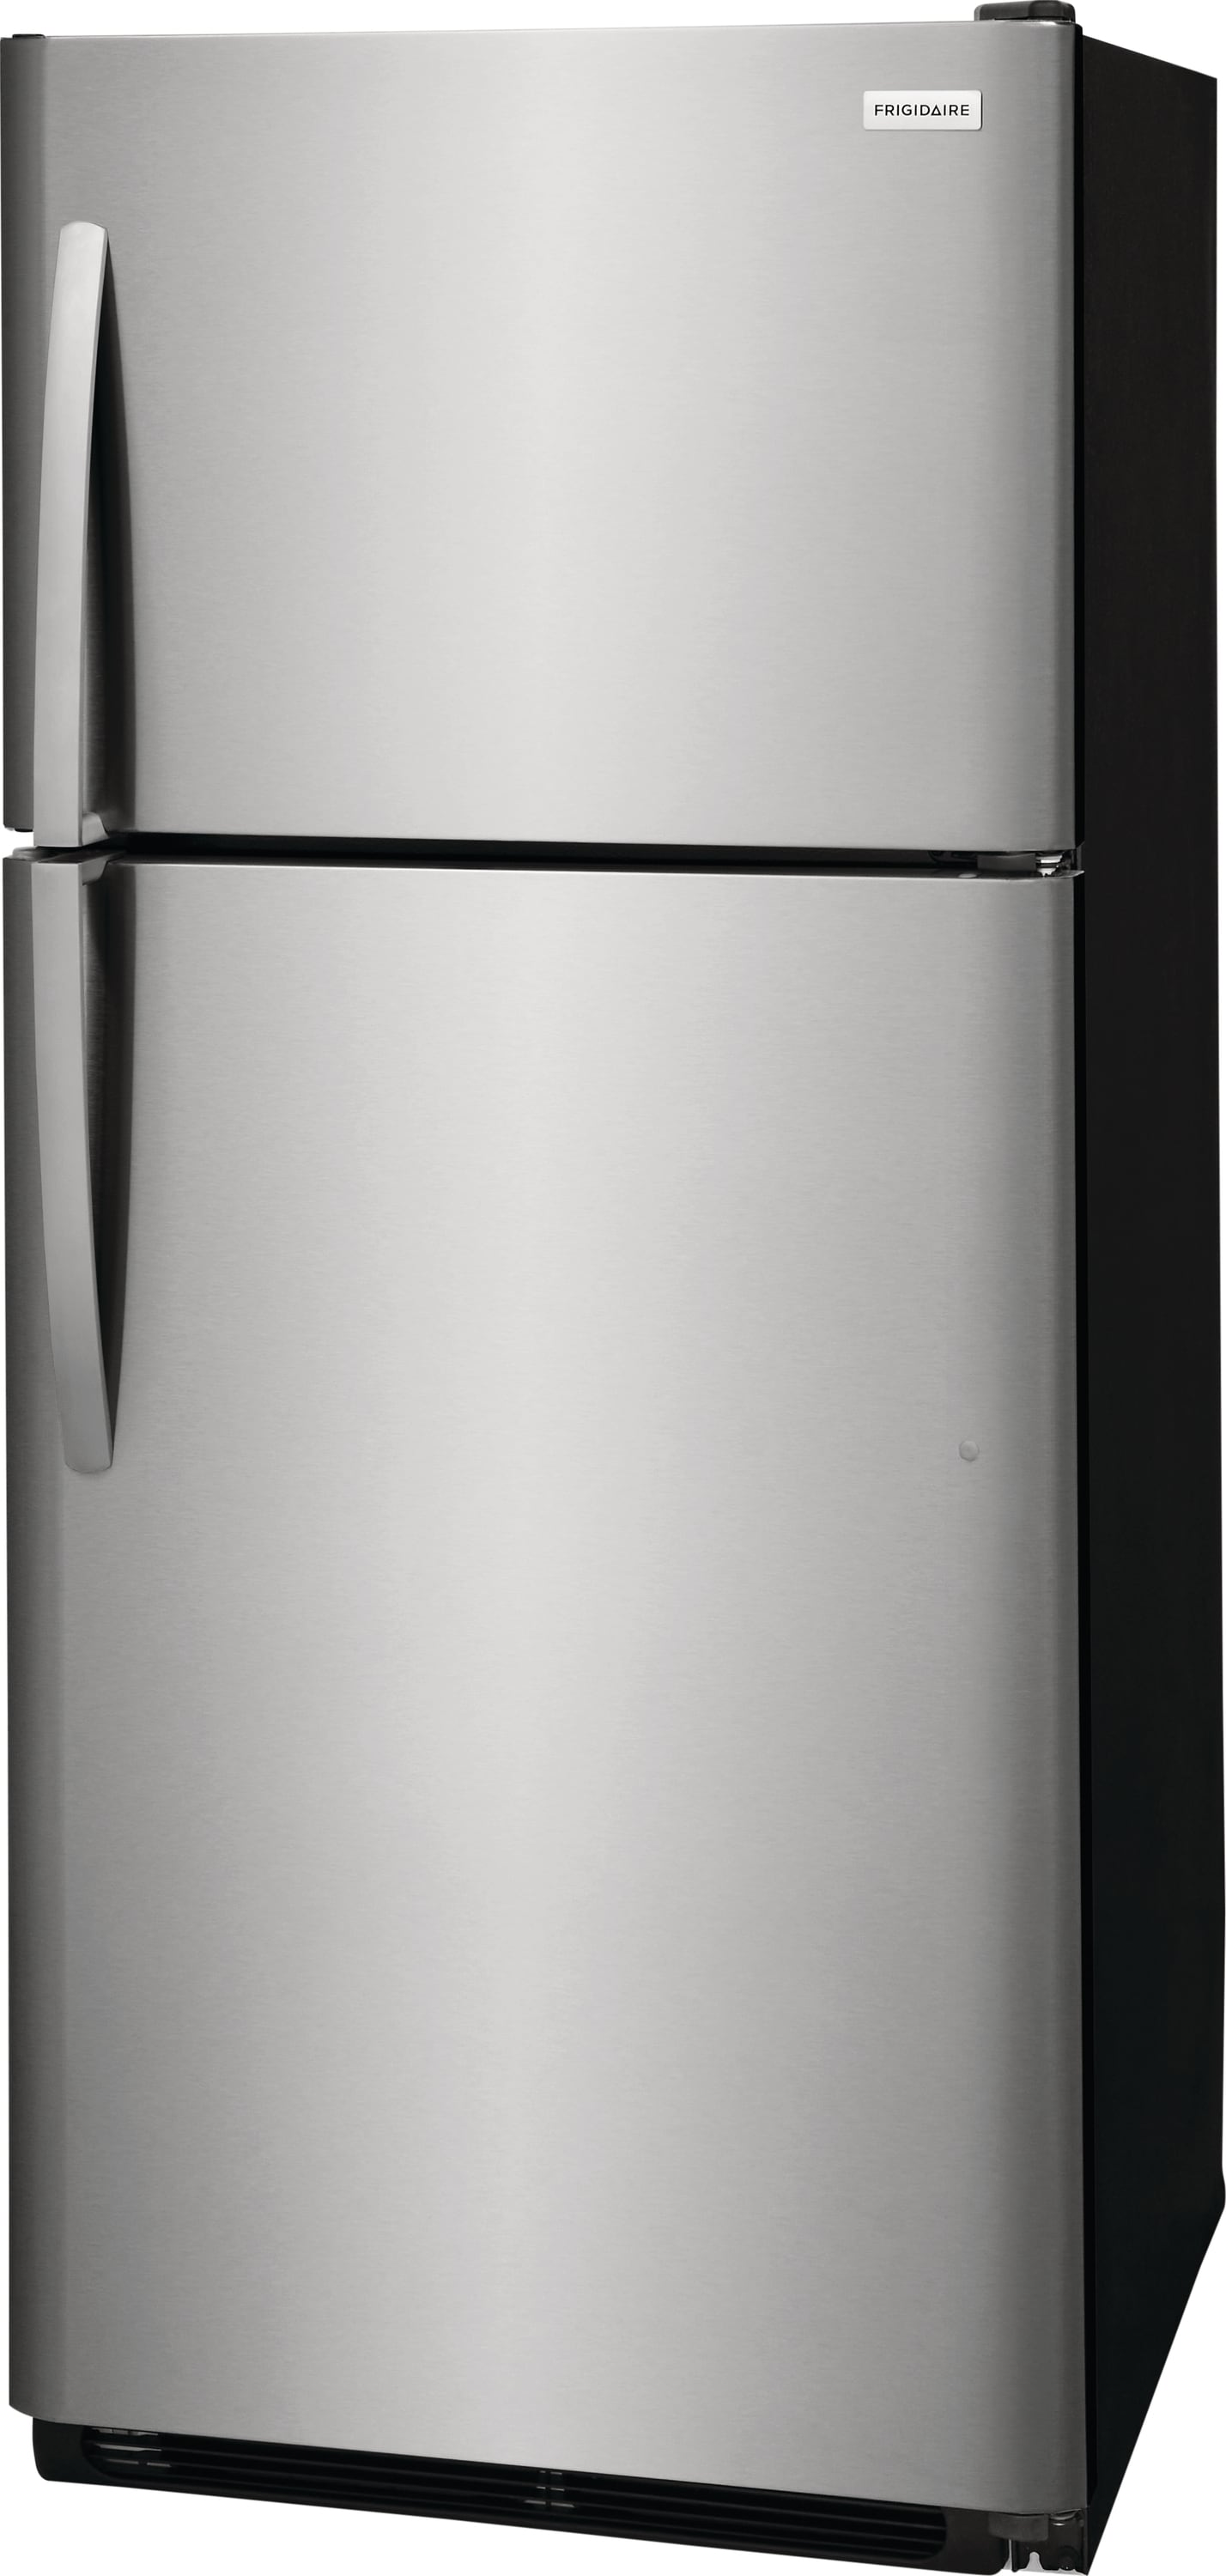 Frigidaire 20.5 Cu. Ft. Top Freezer Refrigerator in Stainless Steel